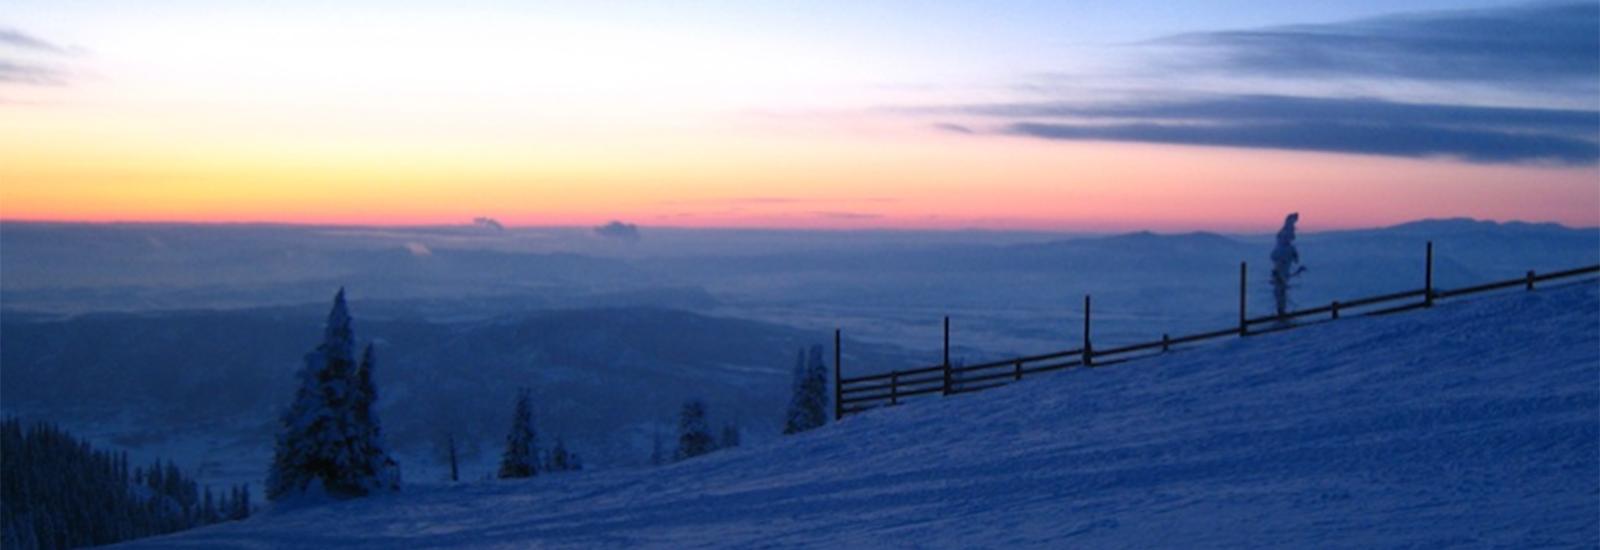 The Colorado Rockies: taken near Storm Peak Laboratory, 2010, at sunrise.